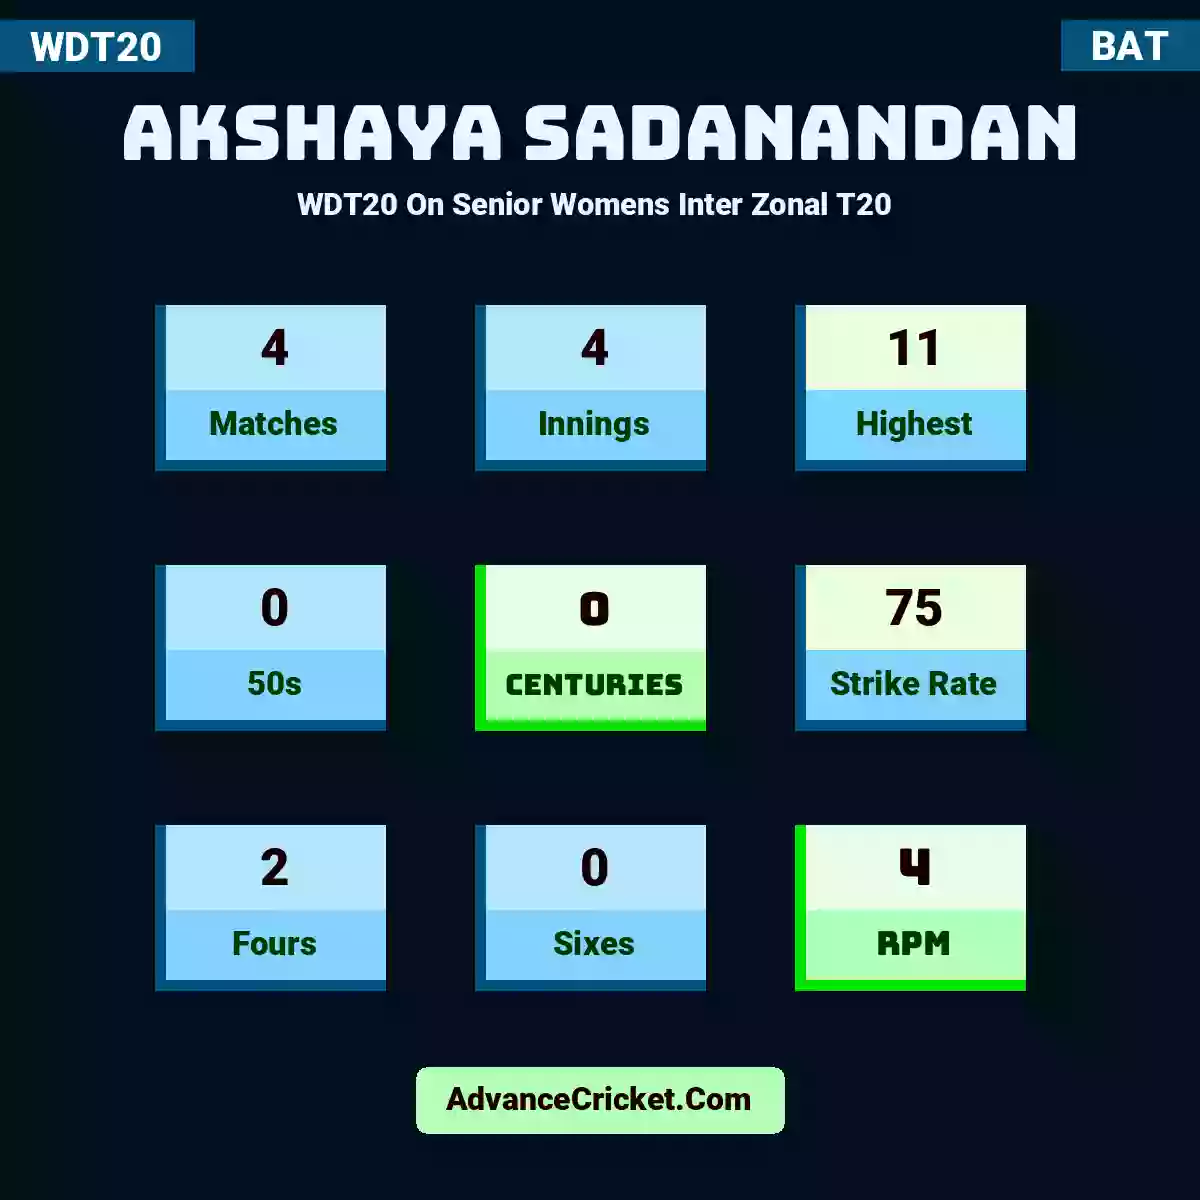 Akshaya Sadanandan WDT20  On Senior Womens Inter Zonal T20 , Akshaya Sadanandan played 4 matches, scored 11 runs as highest, 0 half-centuries, and 0 centuries, with a strike rate of 75. A.Sadanandan hit 2 fours and 0 sixes, with an RPM of 4.